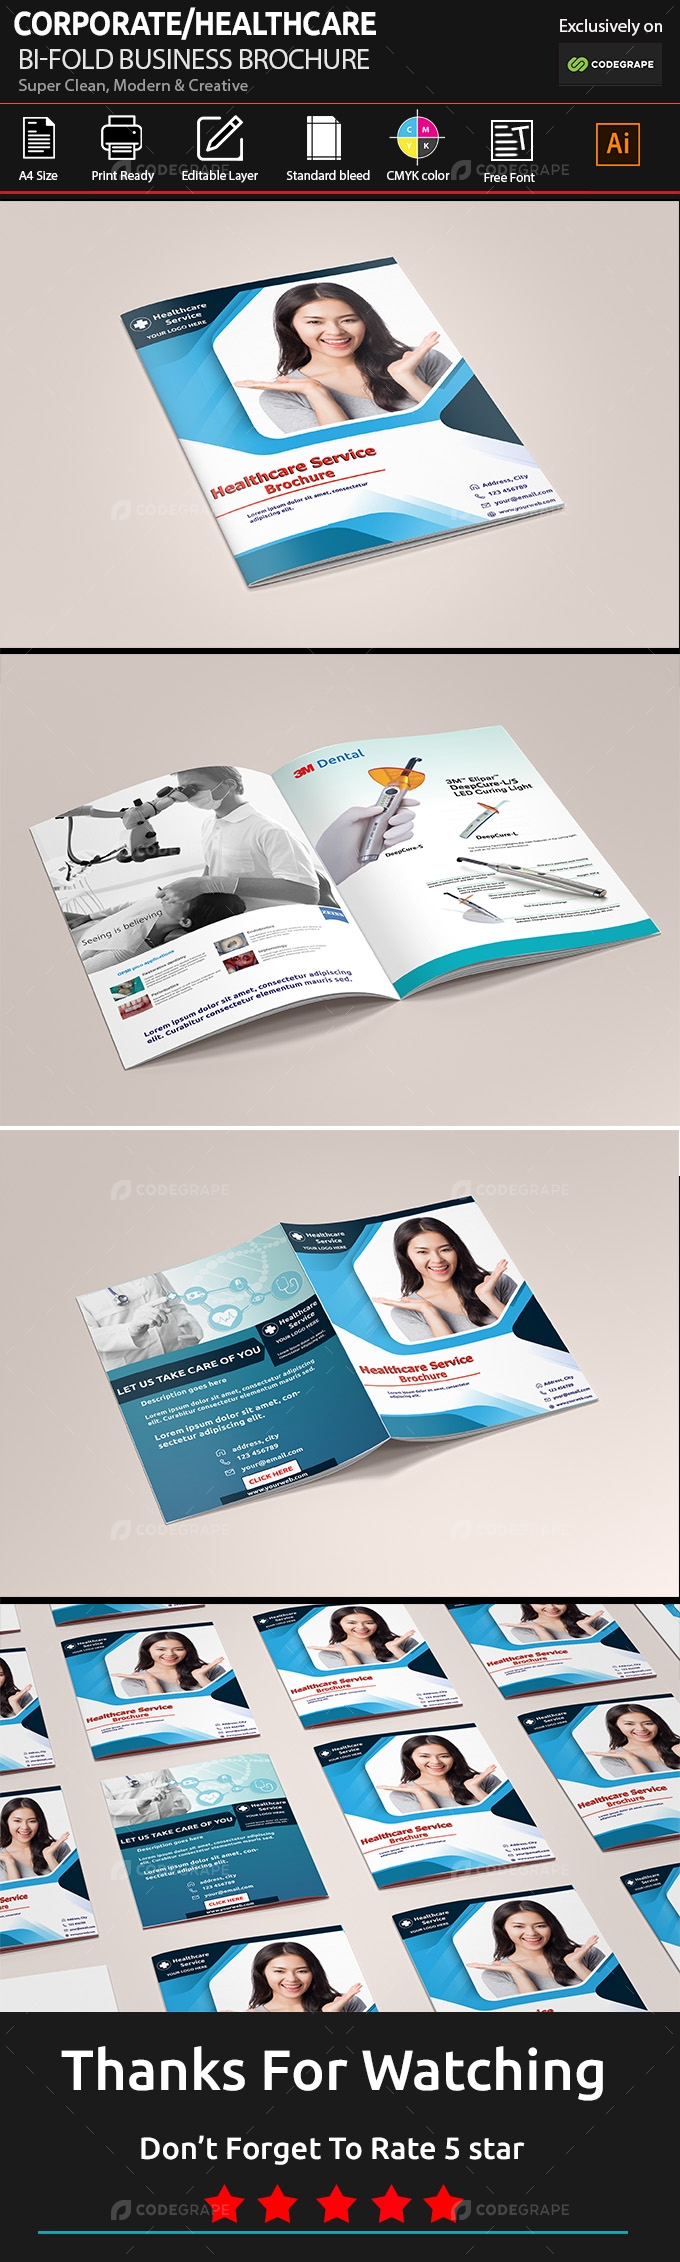 Healthcare Bi-Fold Brochure